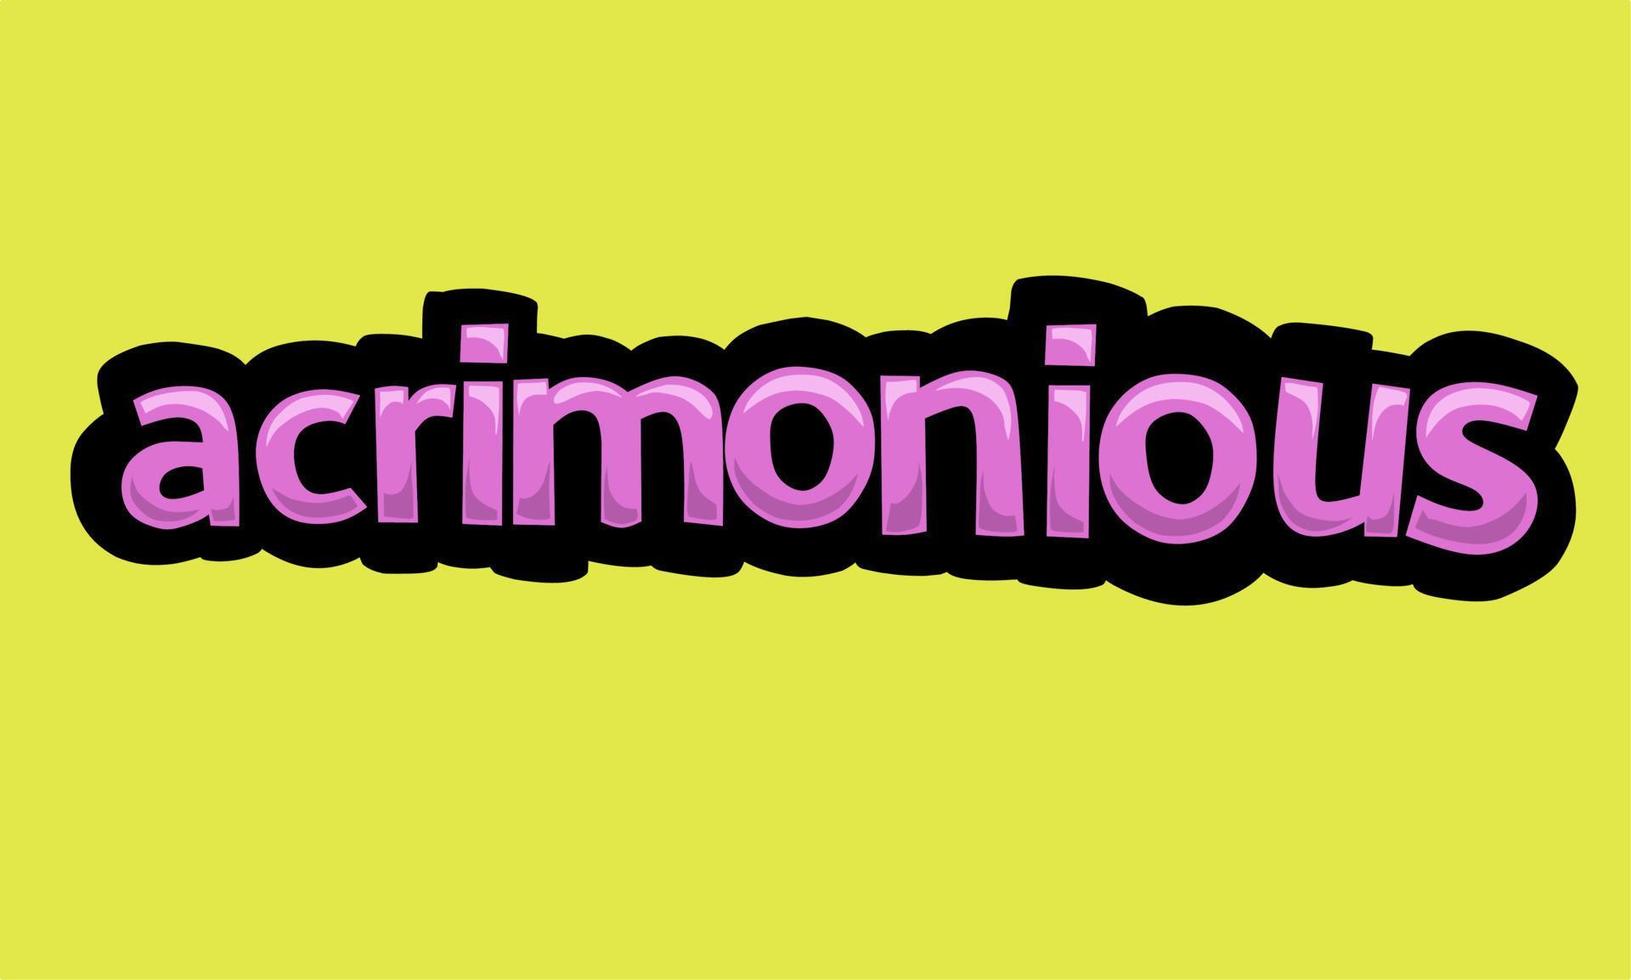 ACRIMONIOUS writing vector design on a yellow background